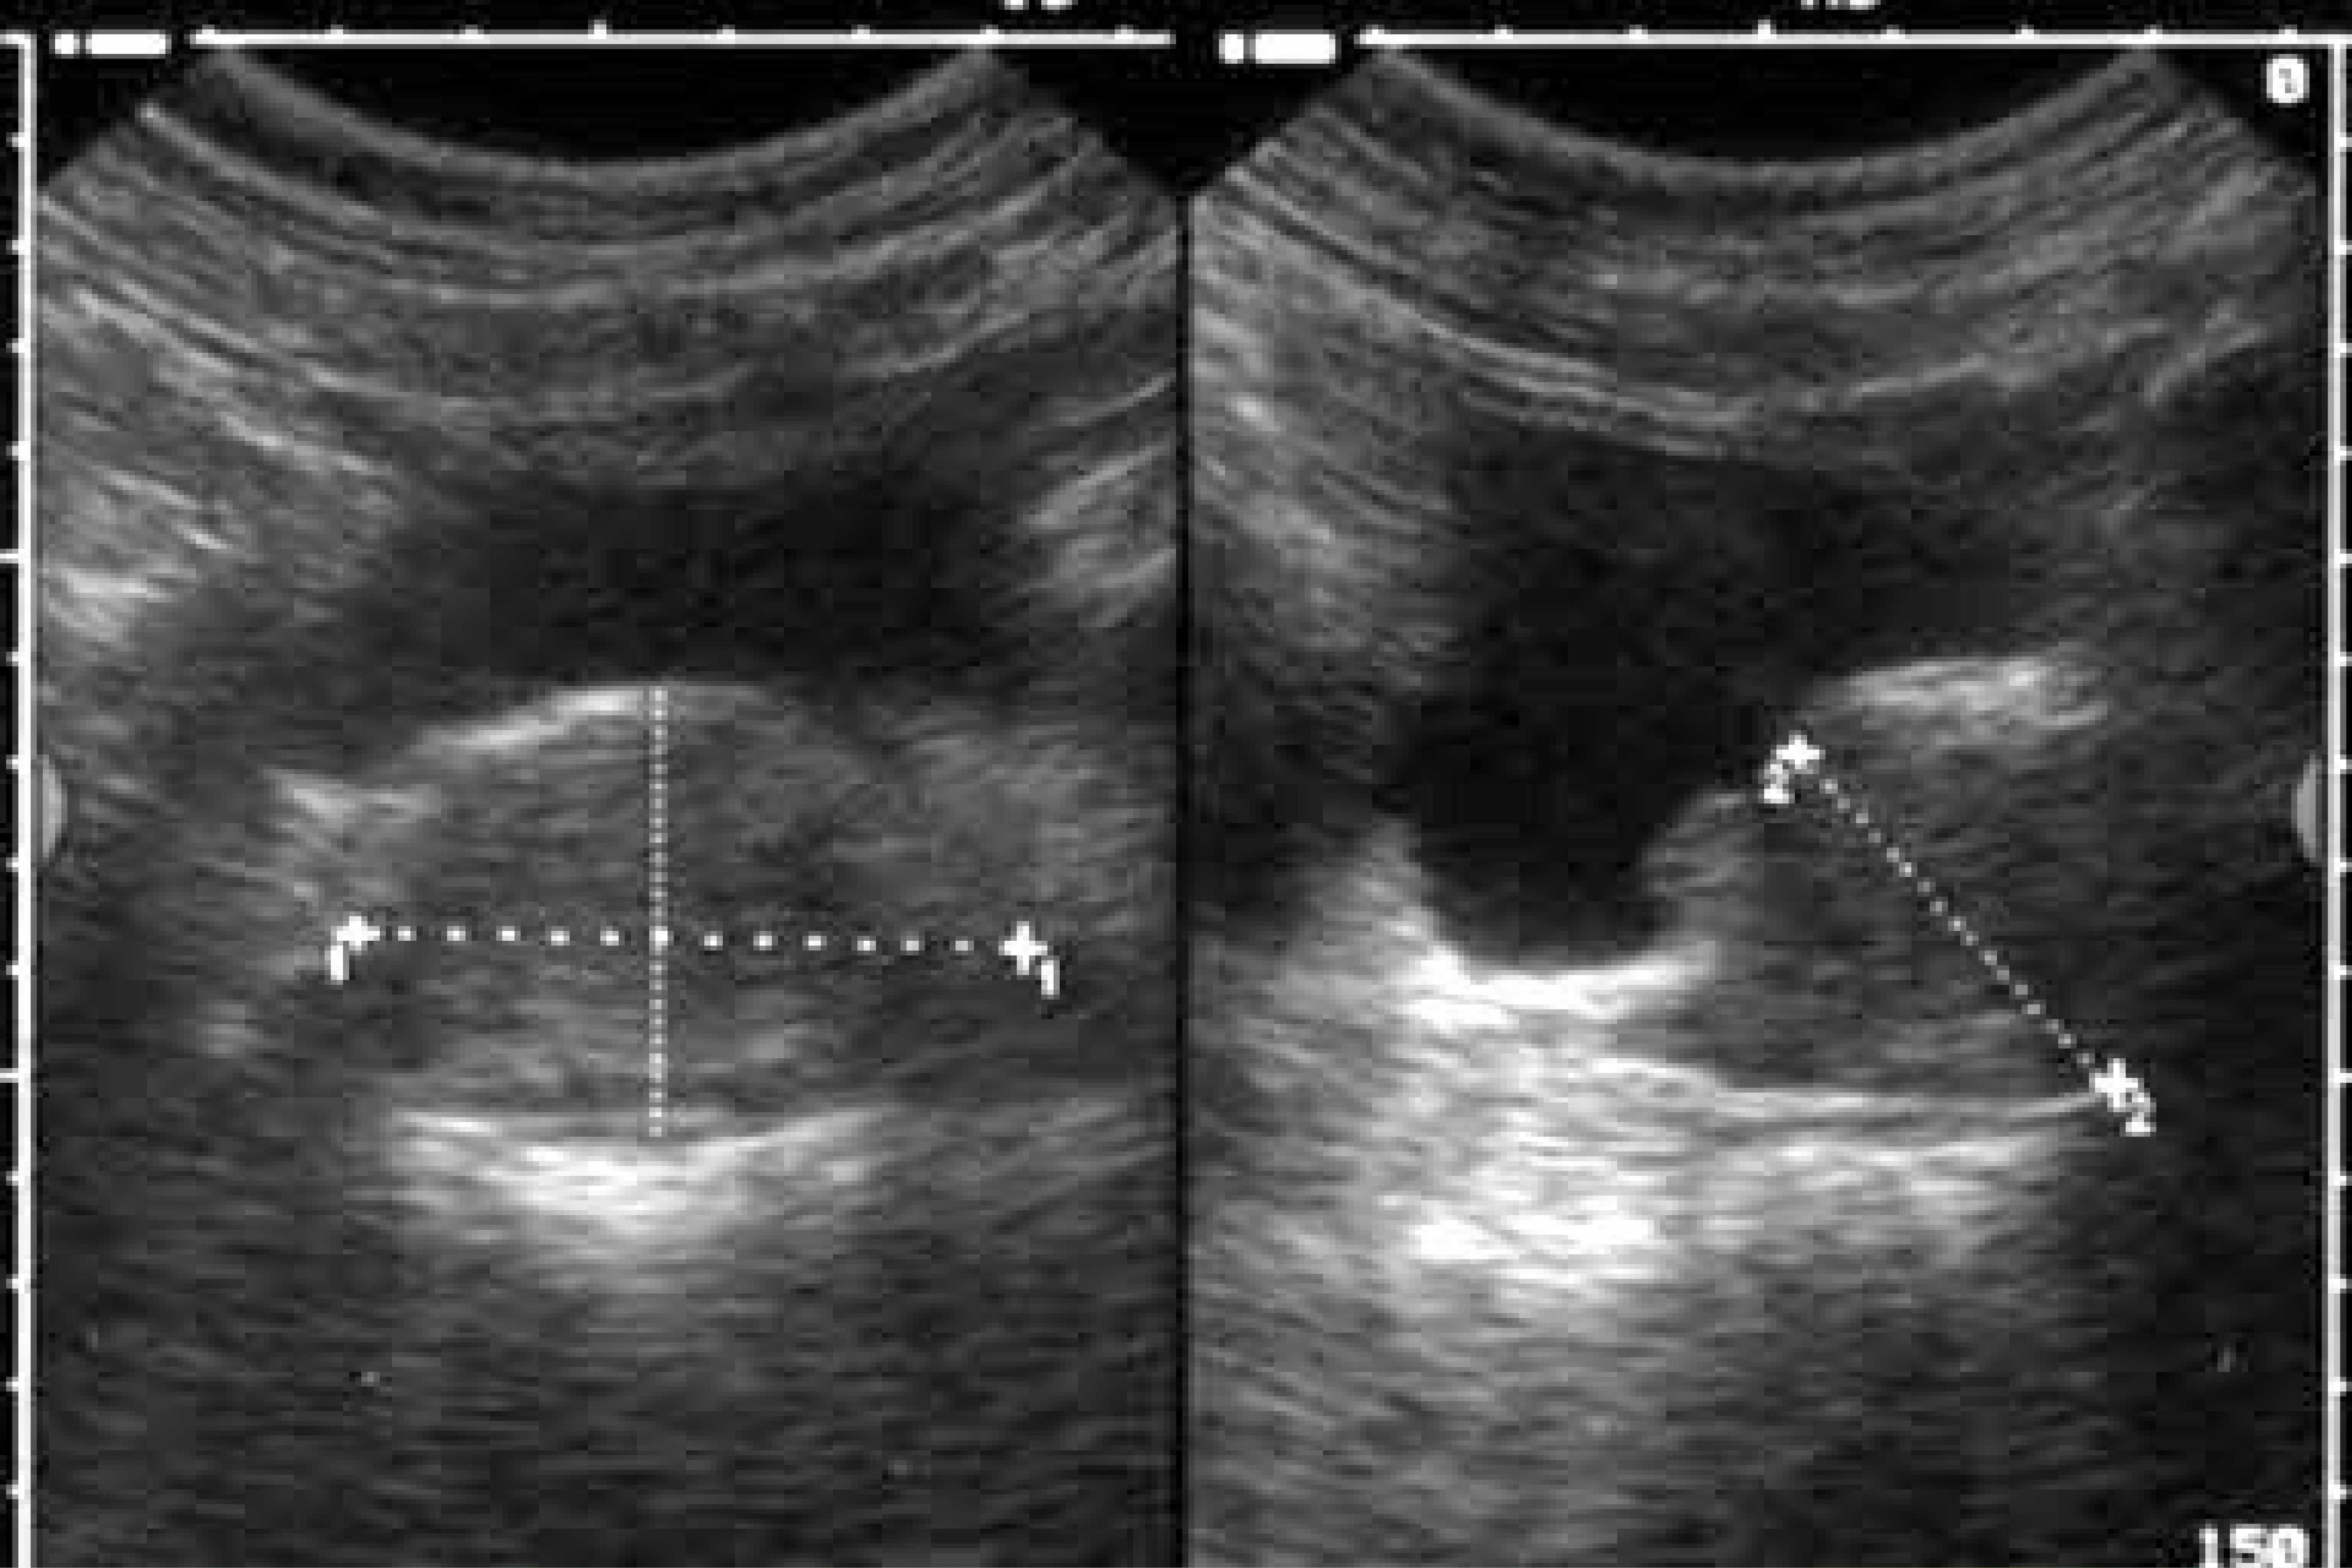 Biopsia de prostată transrectal sub ghidaj ecografic